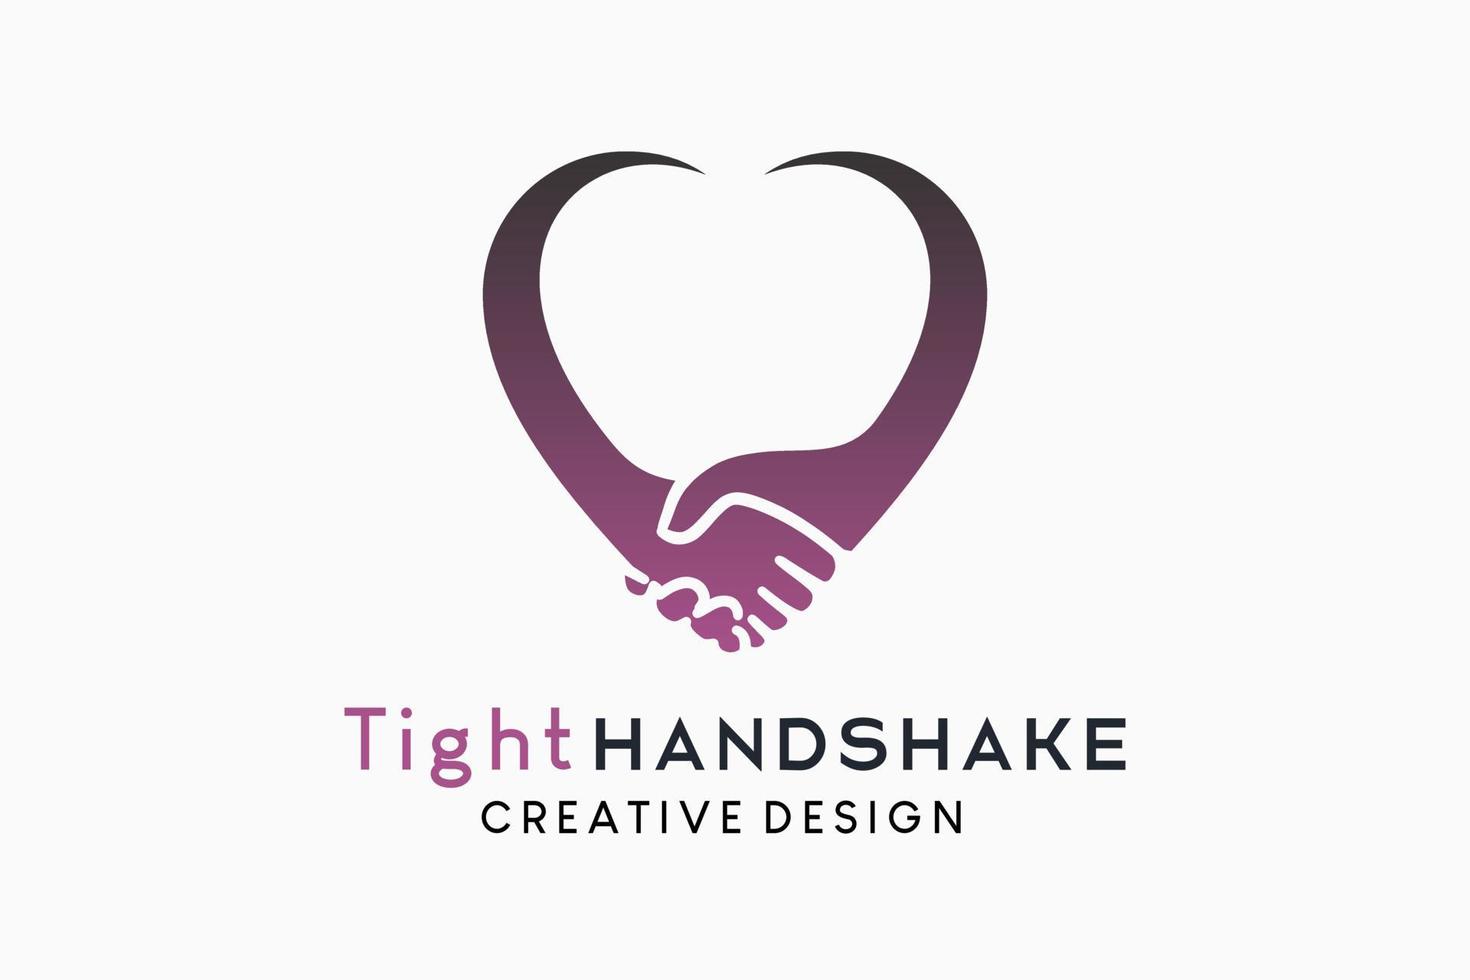 Handshake-Logo-Design im kreativen Konzept der Herzform vektor